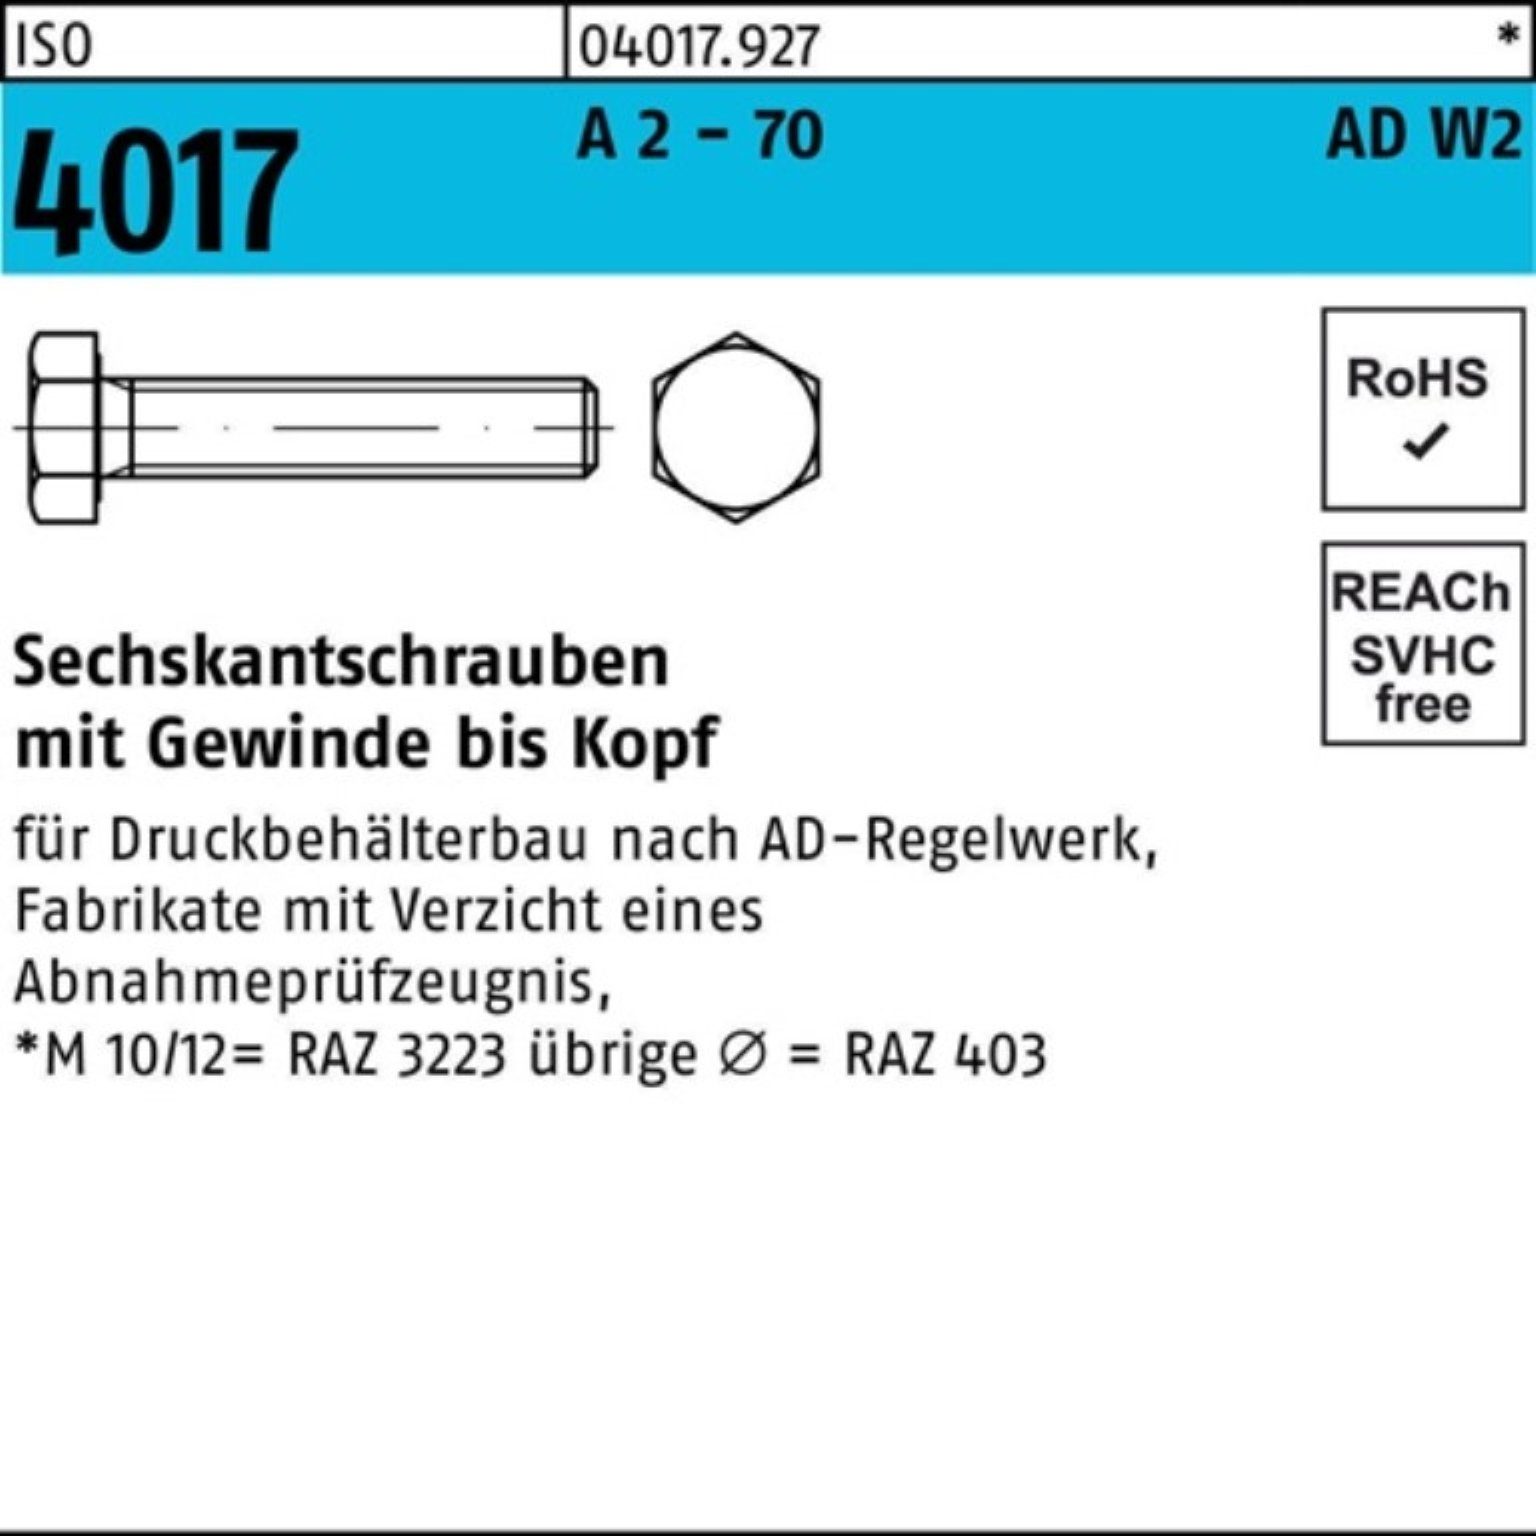 Bufab Sechskantschraube 100er Pack Sechskantschraube ISO 4017 VG M10x 45 A 2 - 70 AD-W2 100 St | Schrauben